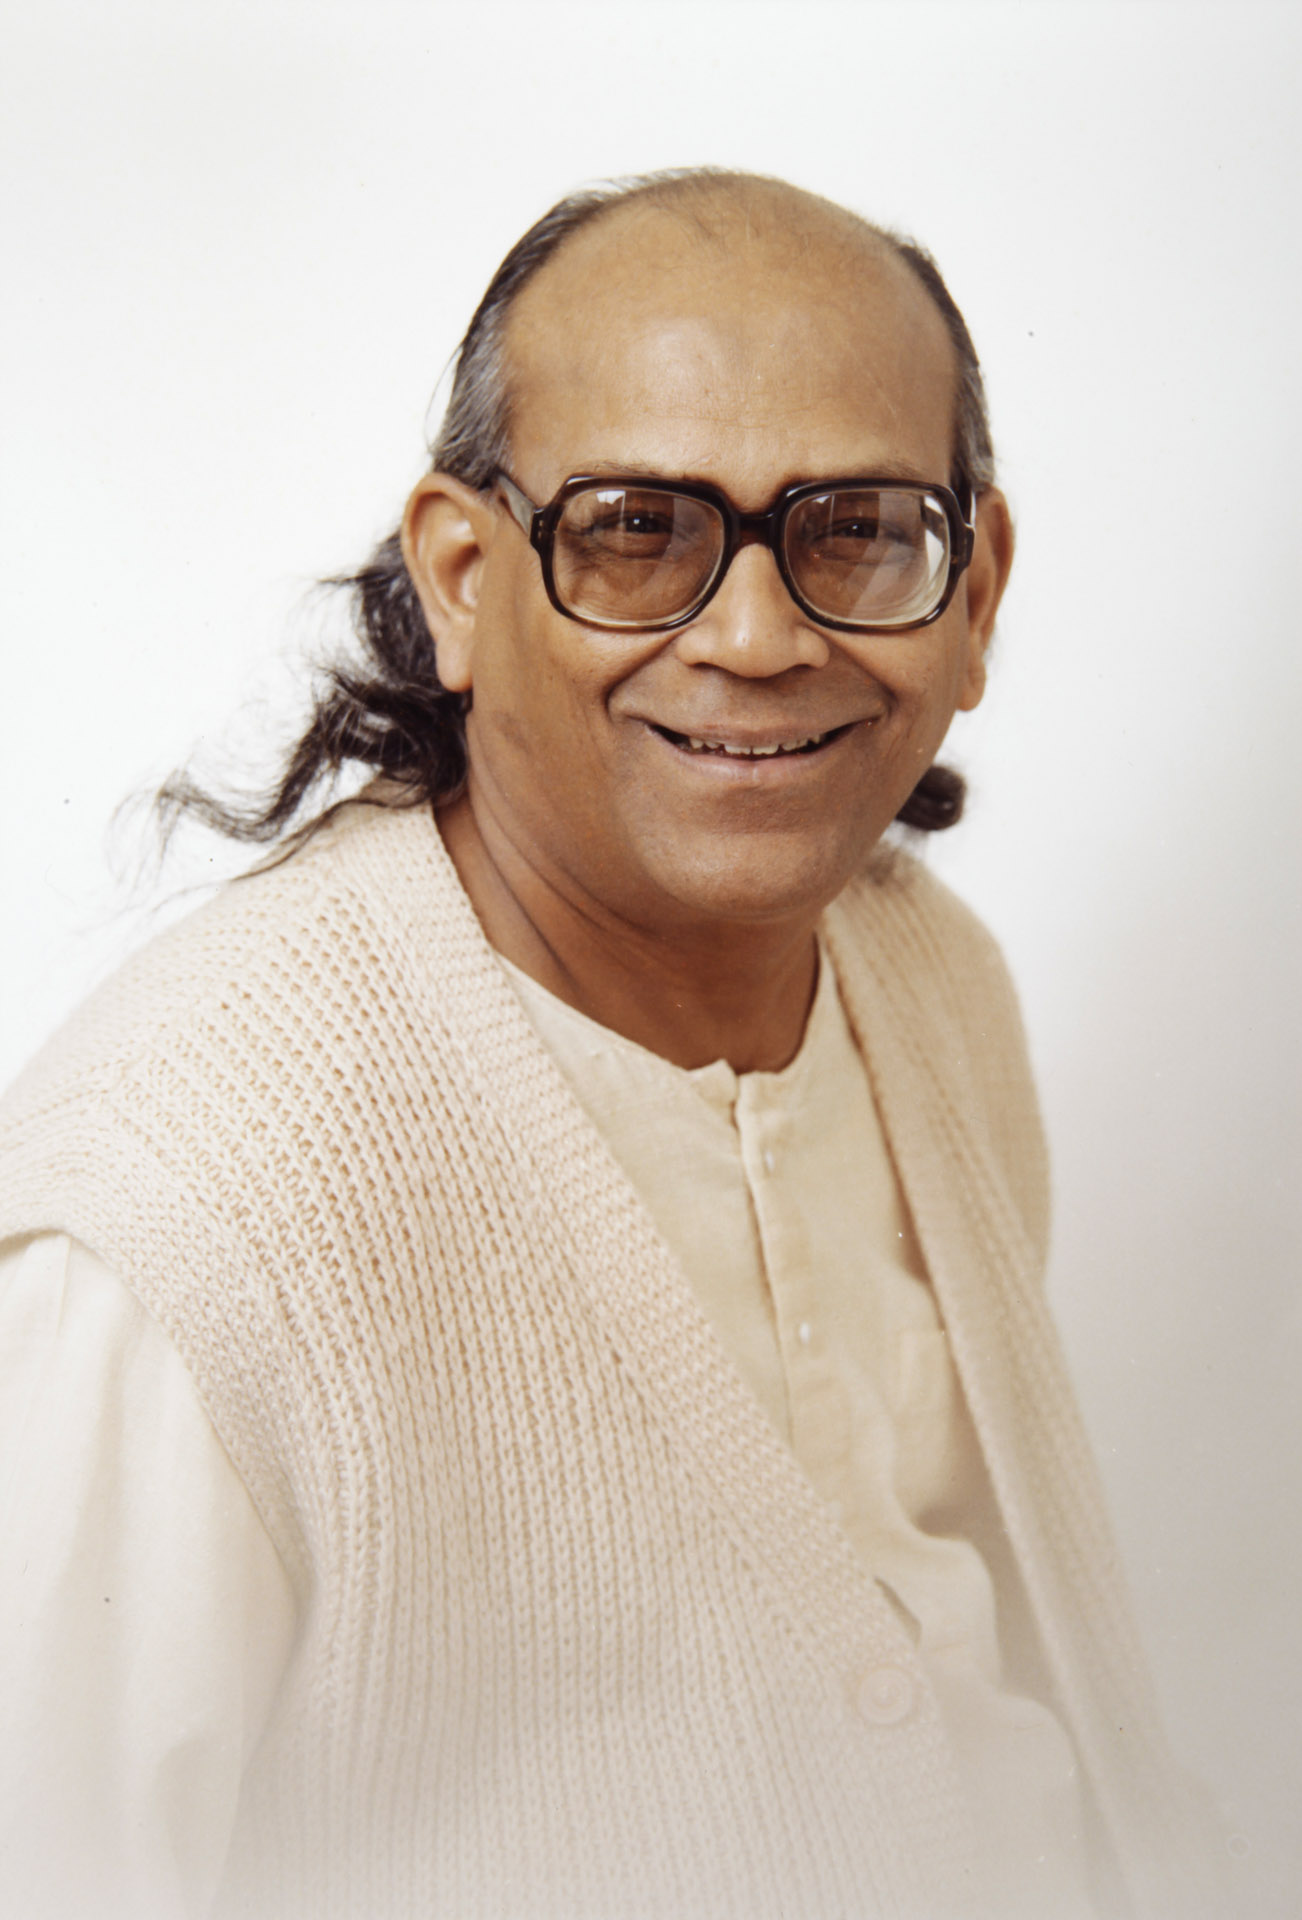 Swami Brahmananda Giri